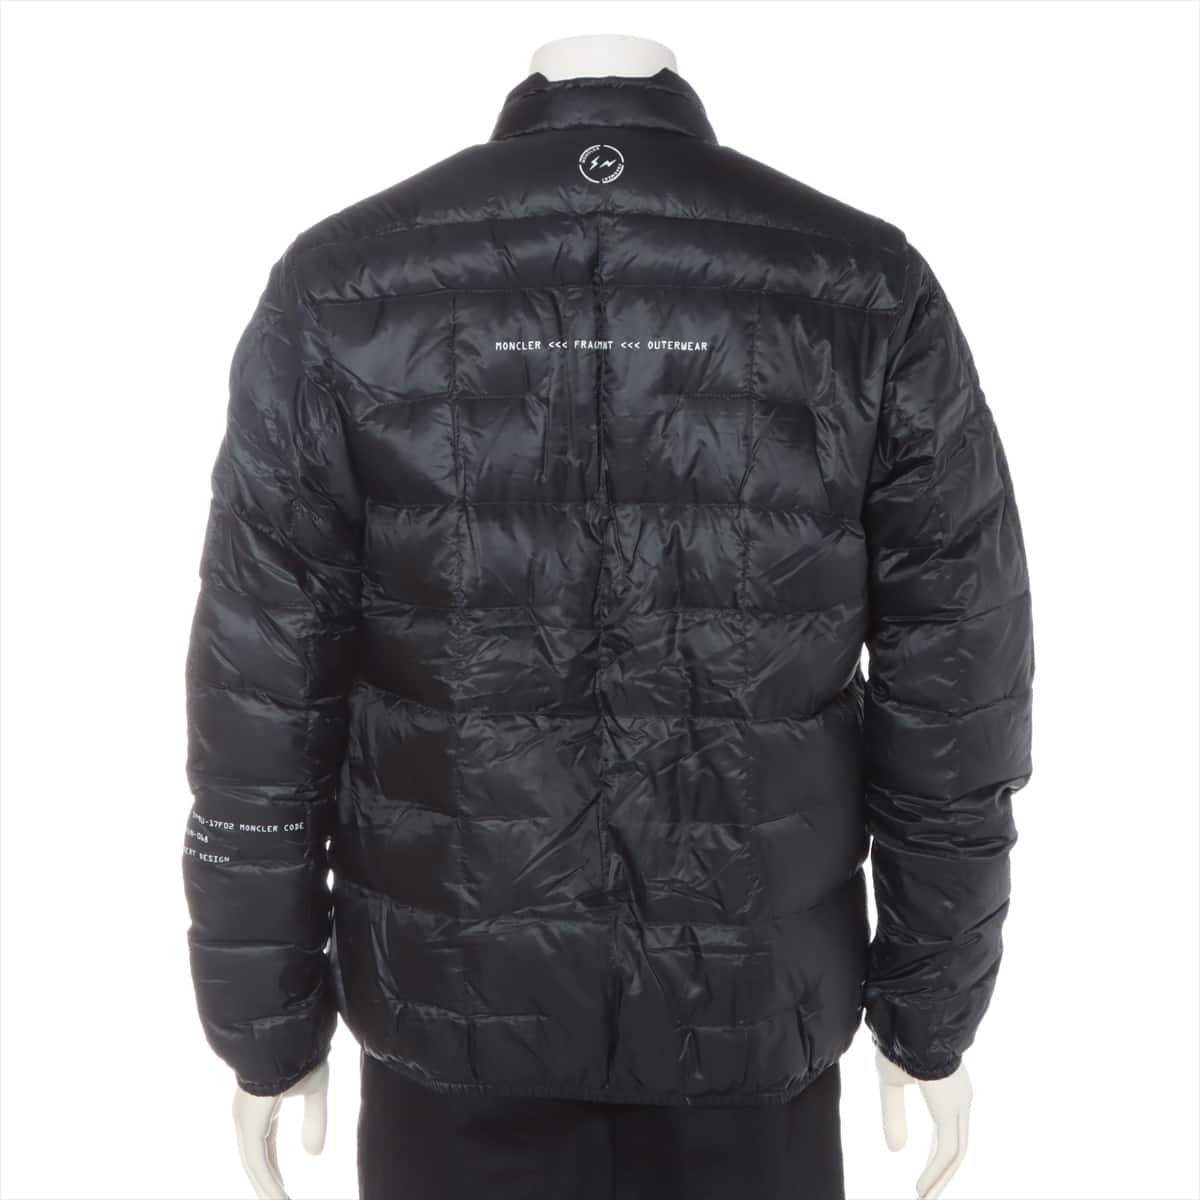 Moncler Genius Fragment HOTZ 18 years Nylon Down jacket 3 Men's Black